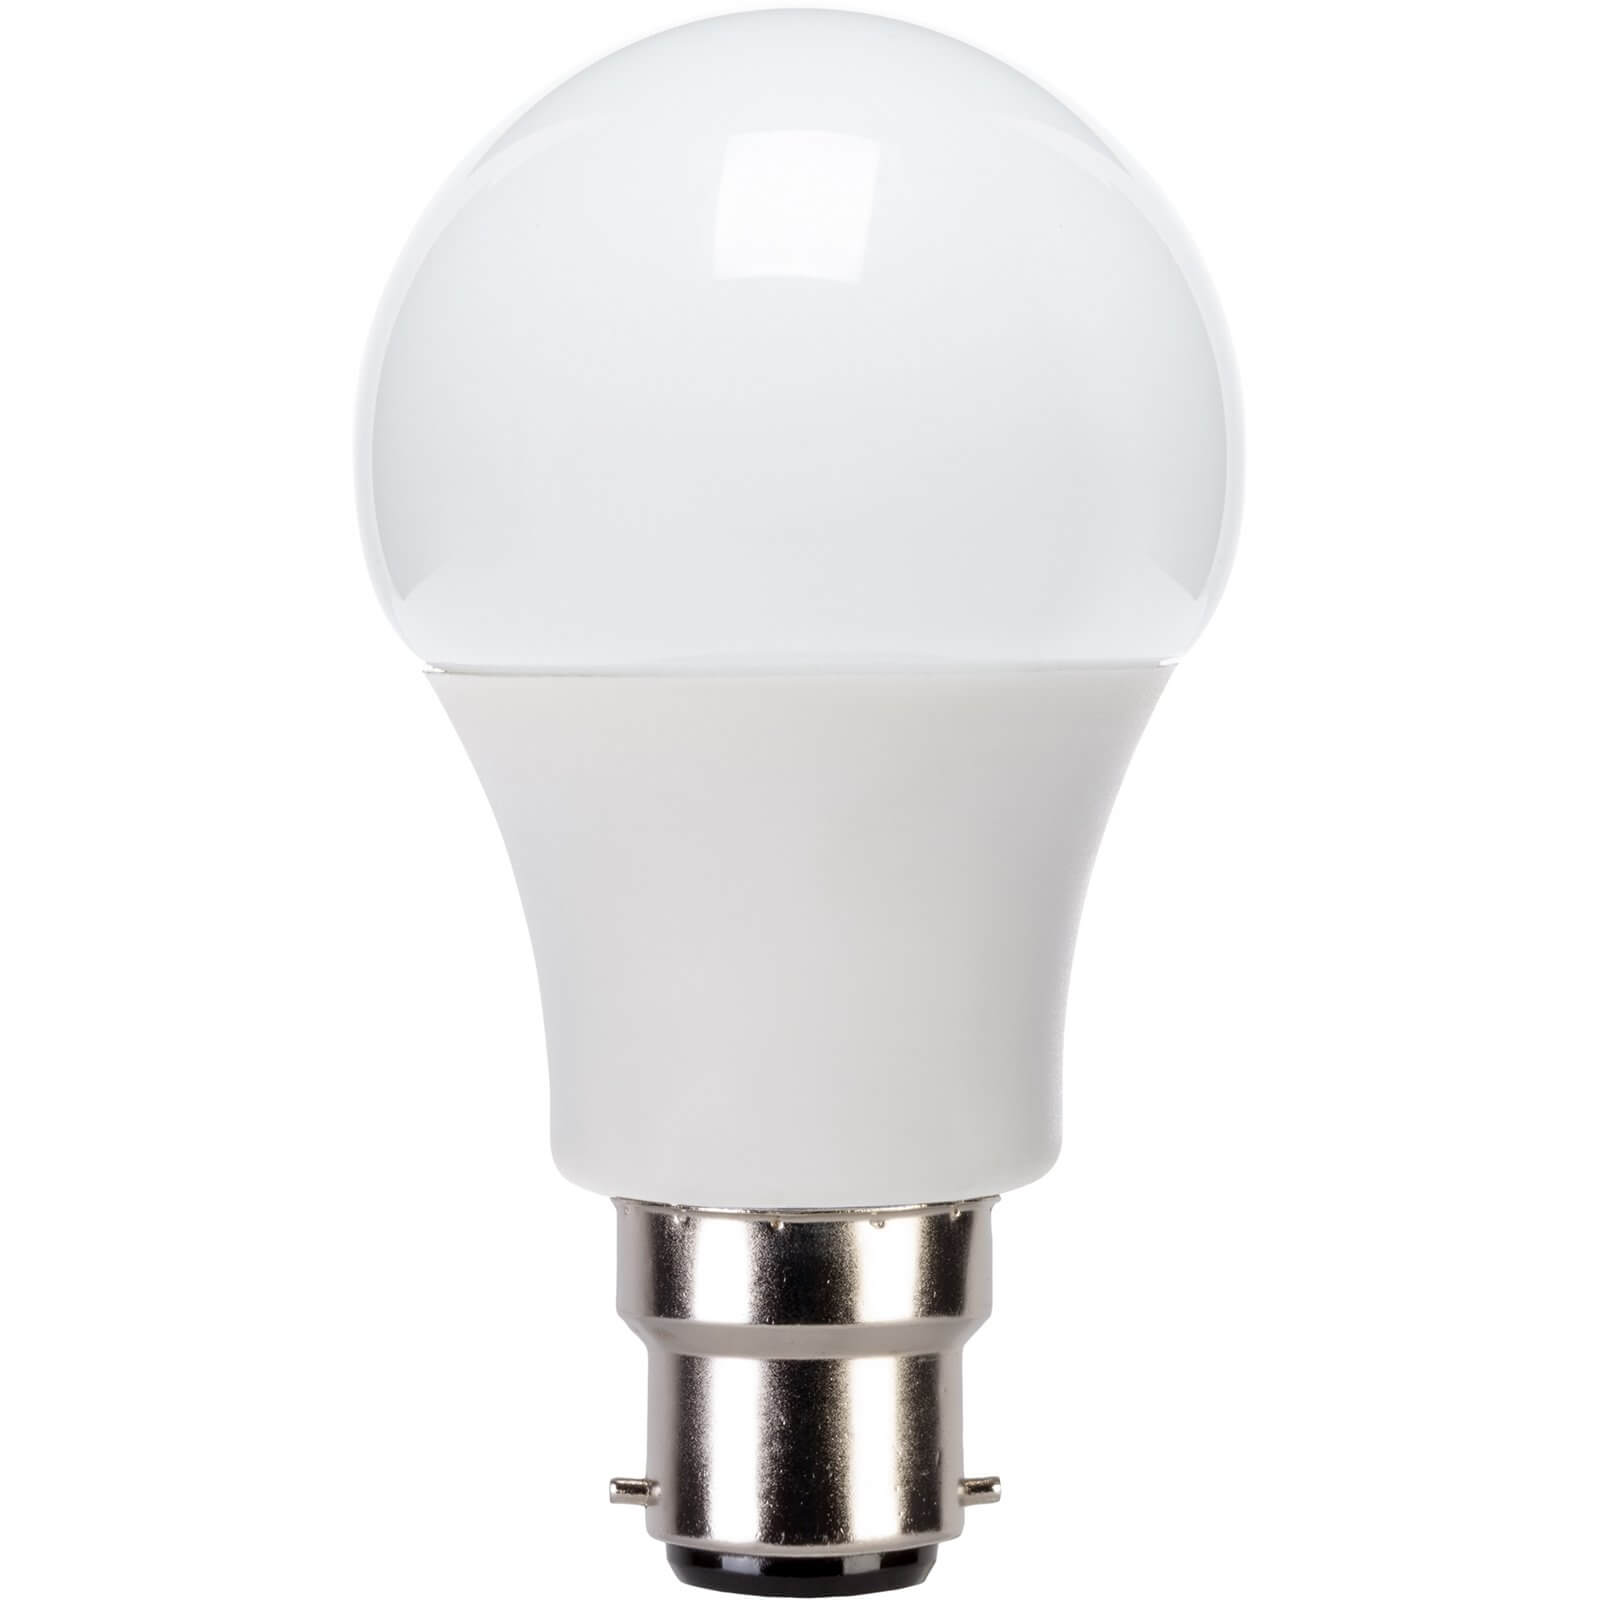 Smart LED A-Lamp RGB Remote 3W B22 White Light Bulb